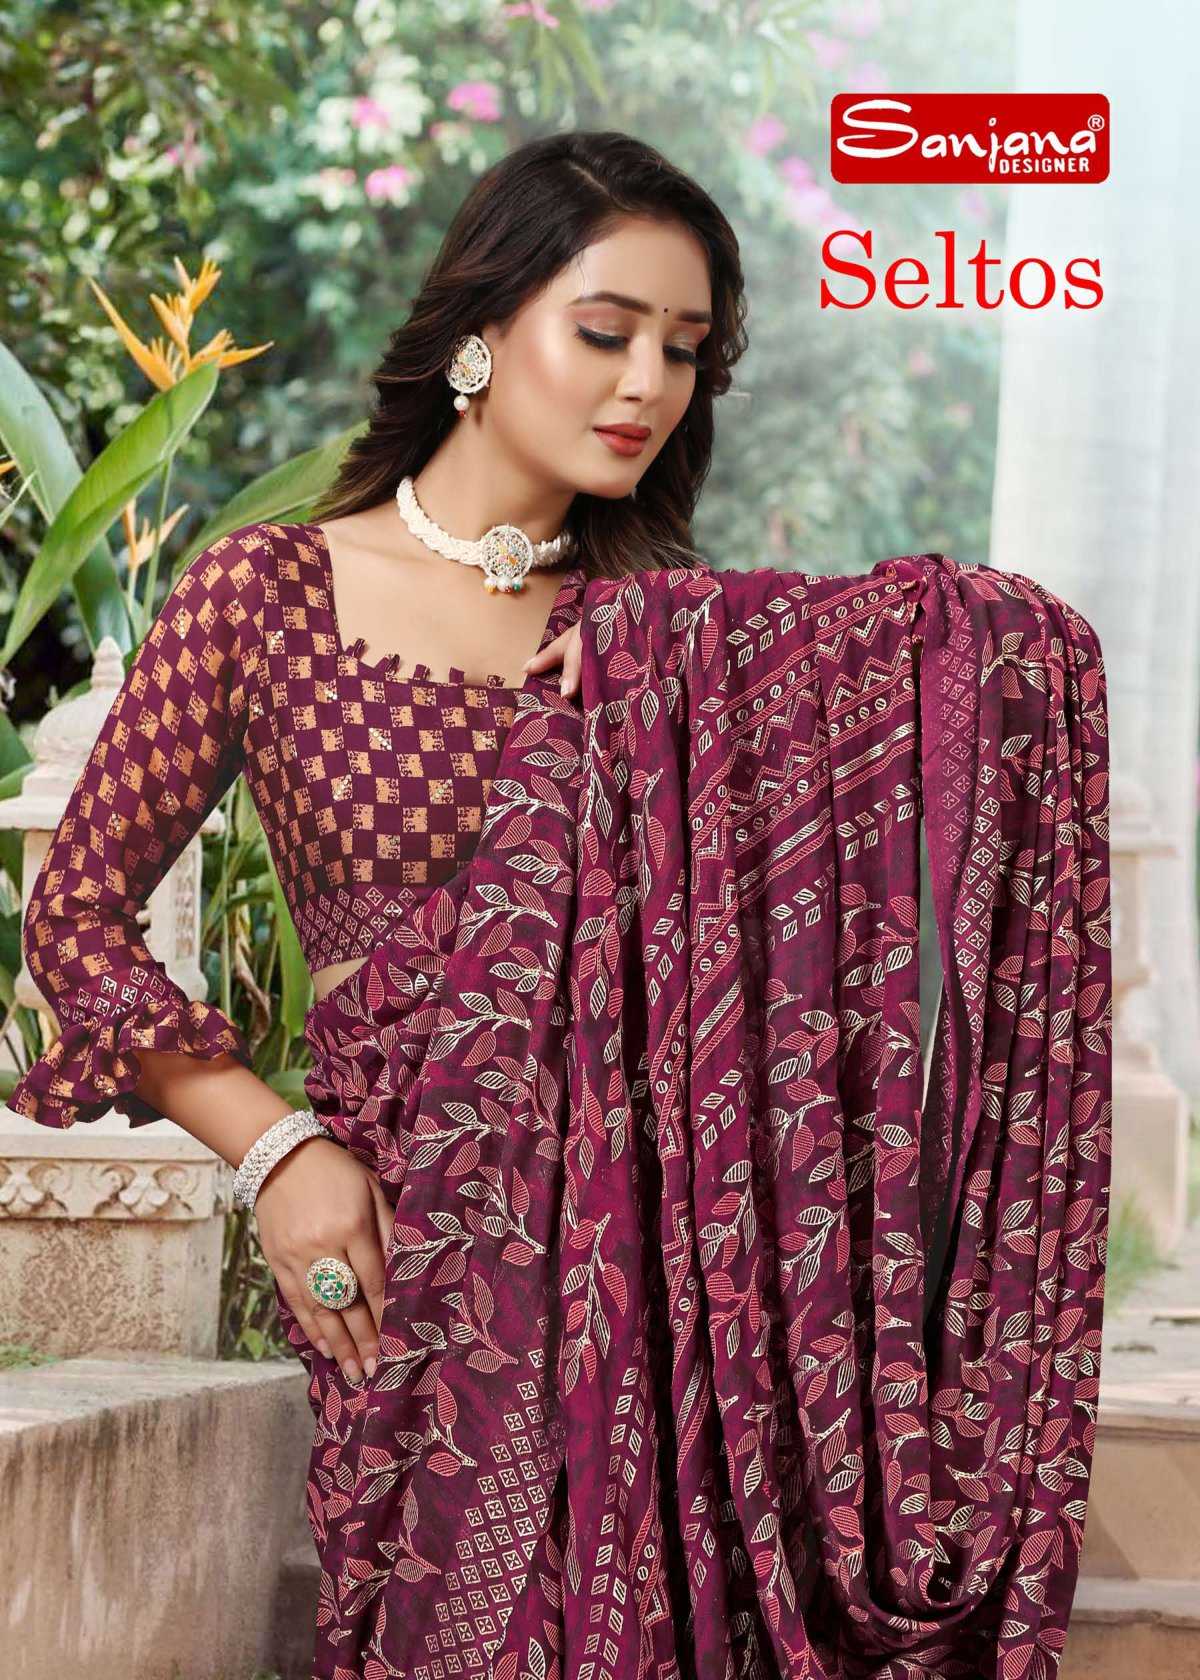 sanjana designer seltos fancy foil print casual sarees supplier